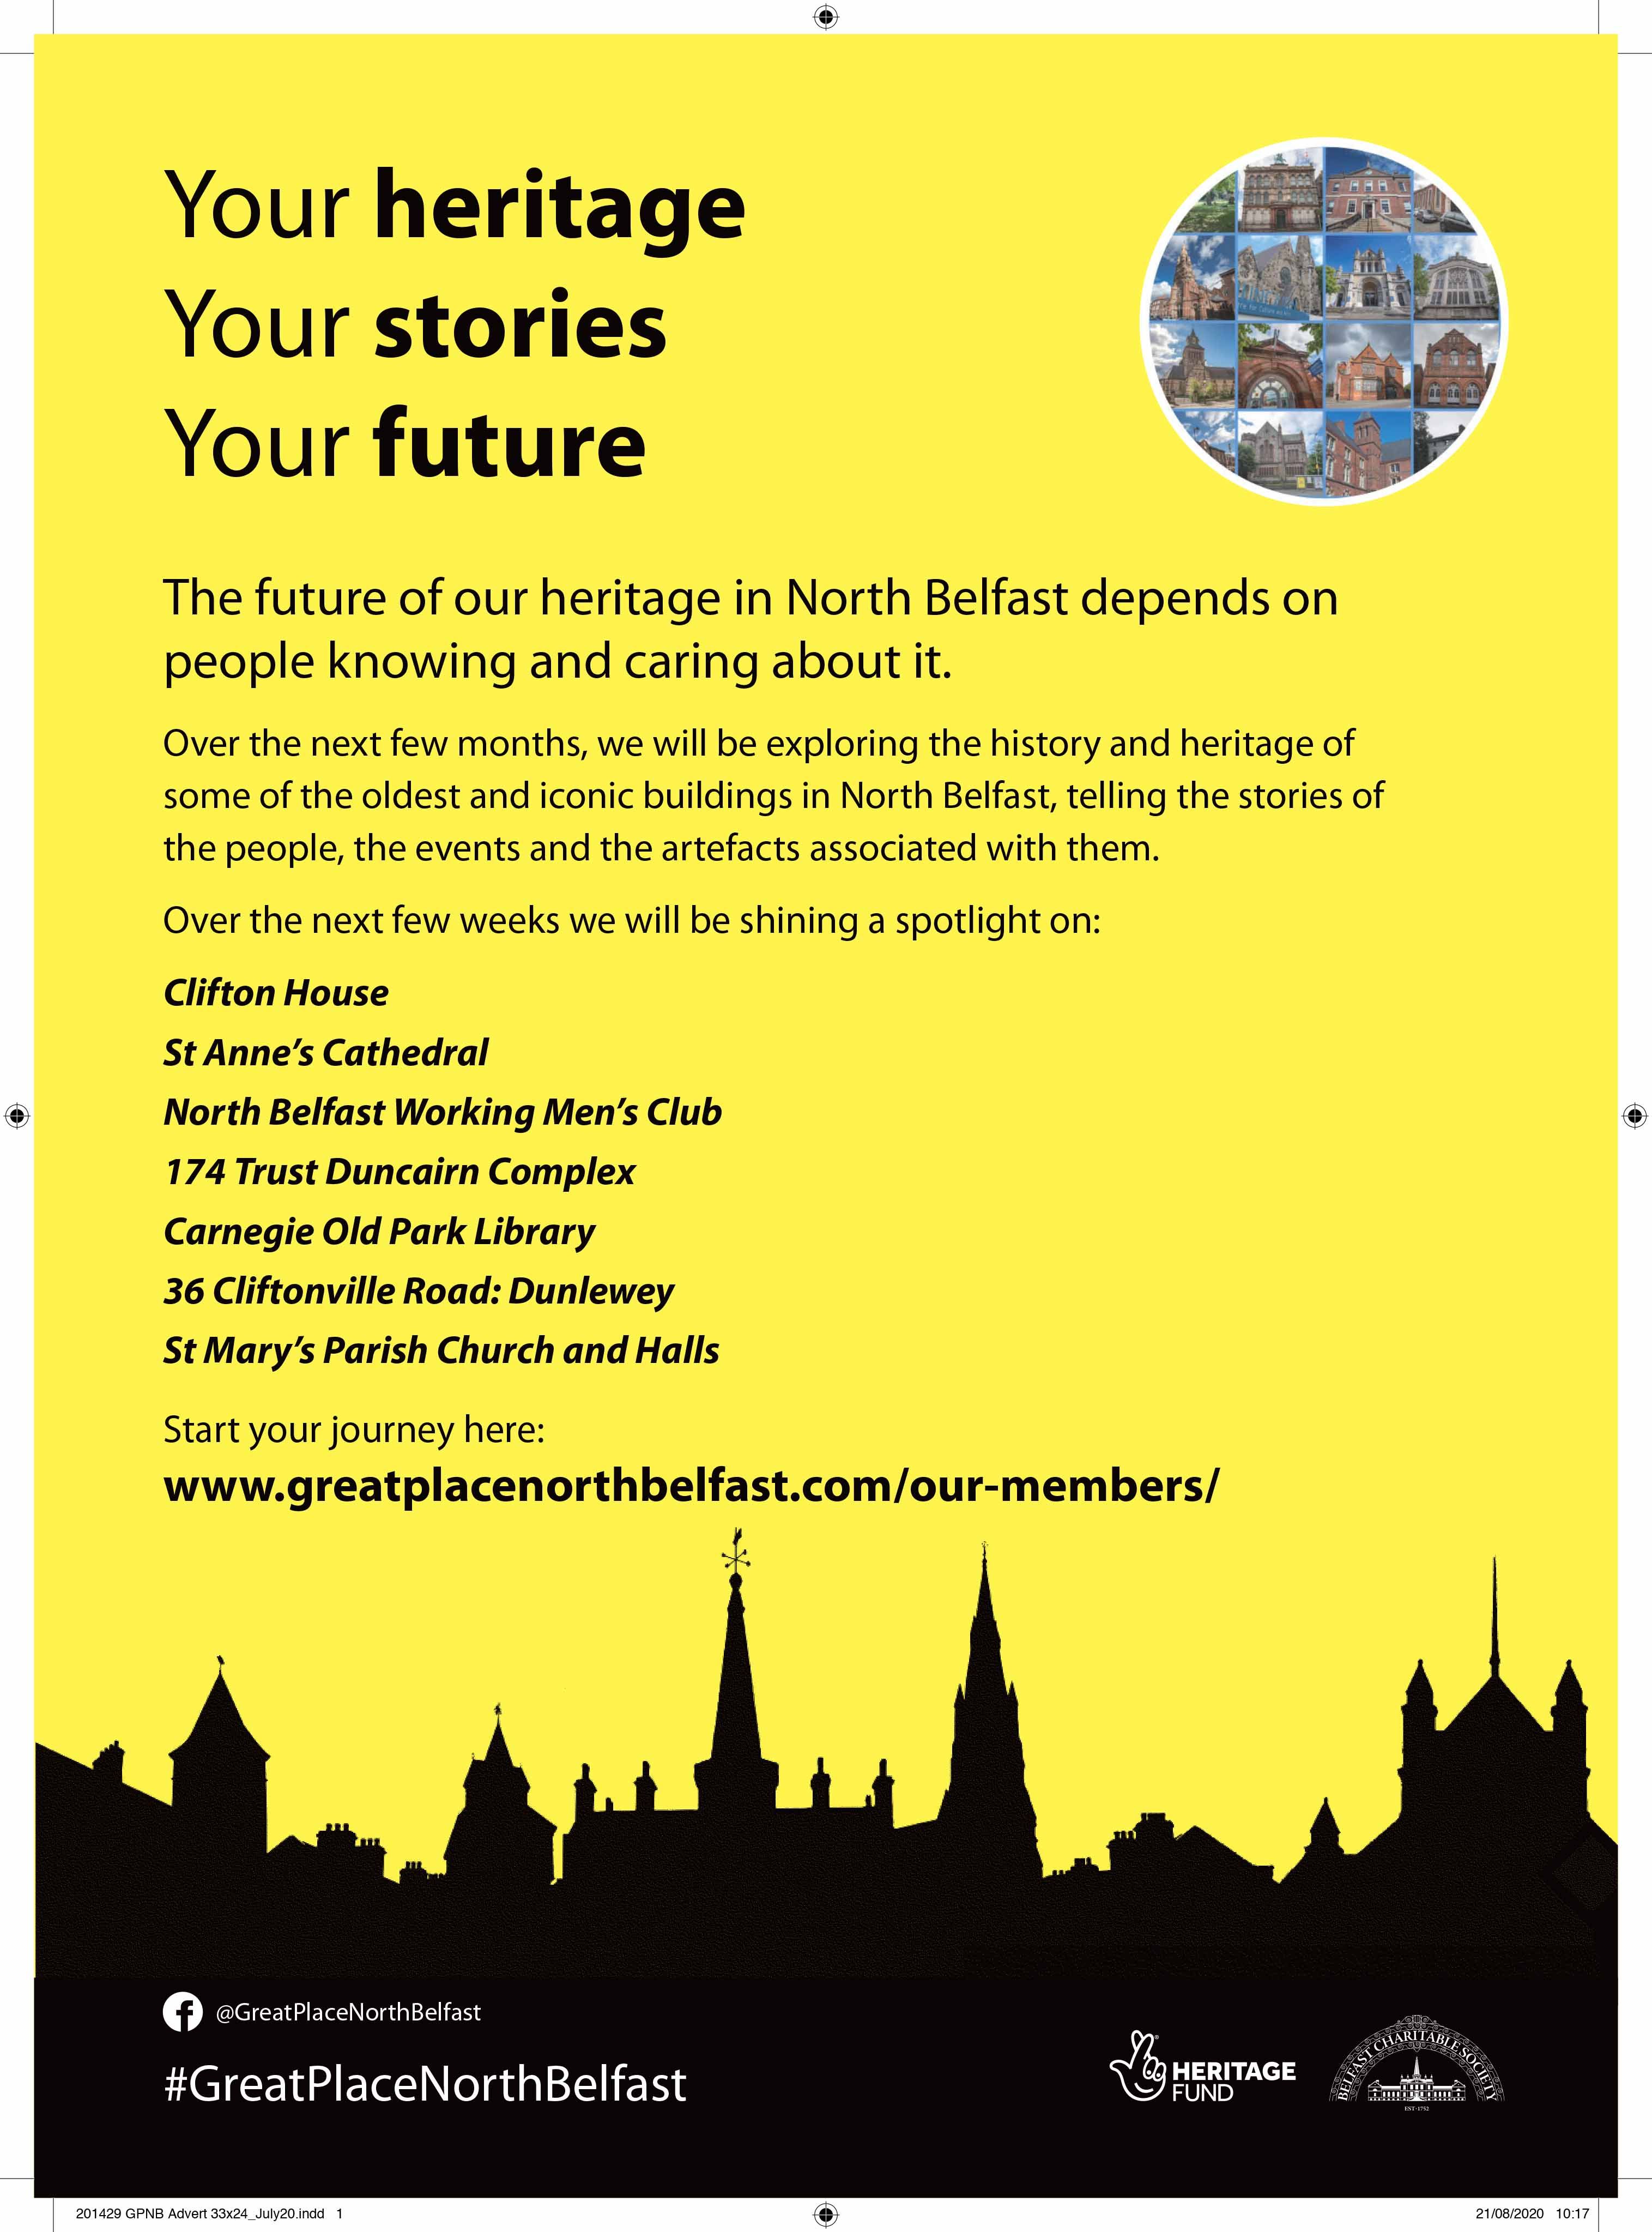 VIDEO FOCUS: Spotlight on North Belfast's heritage